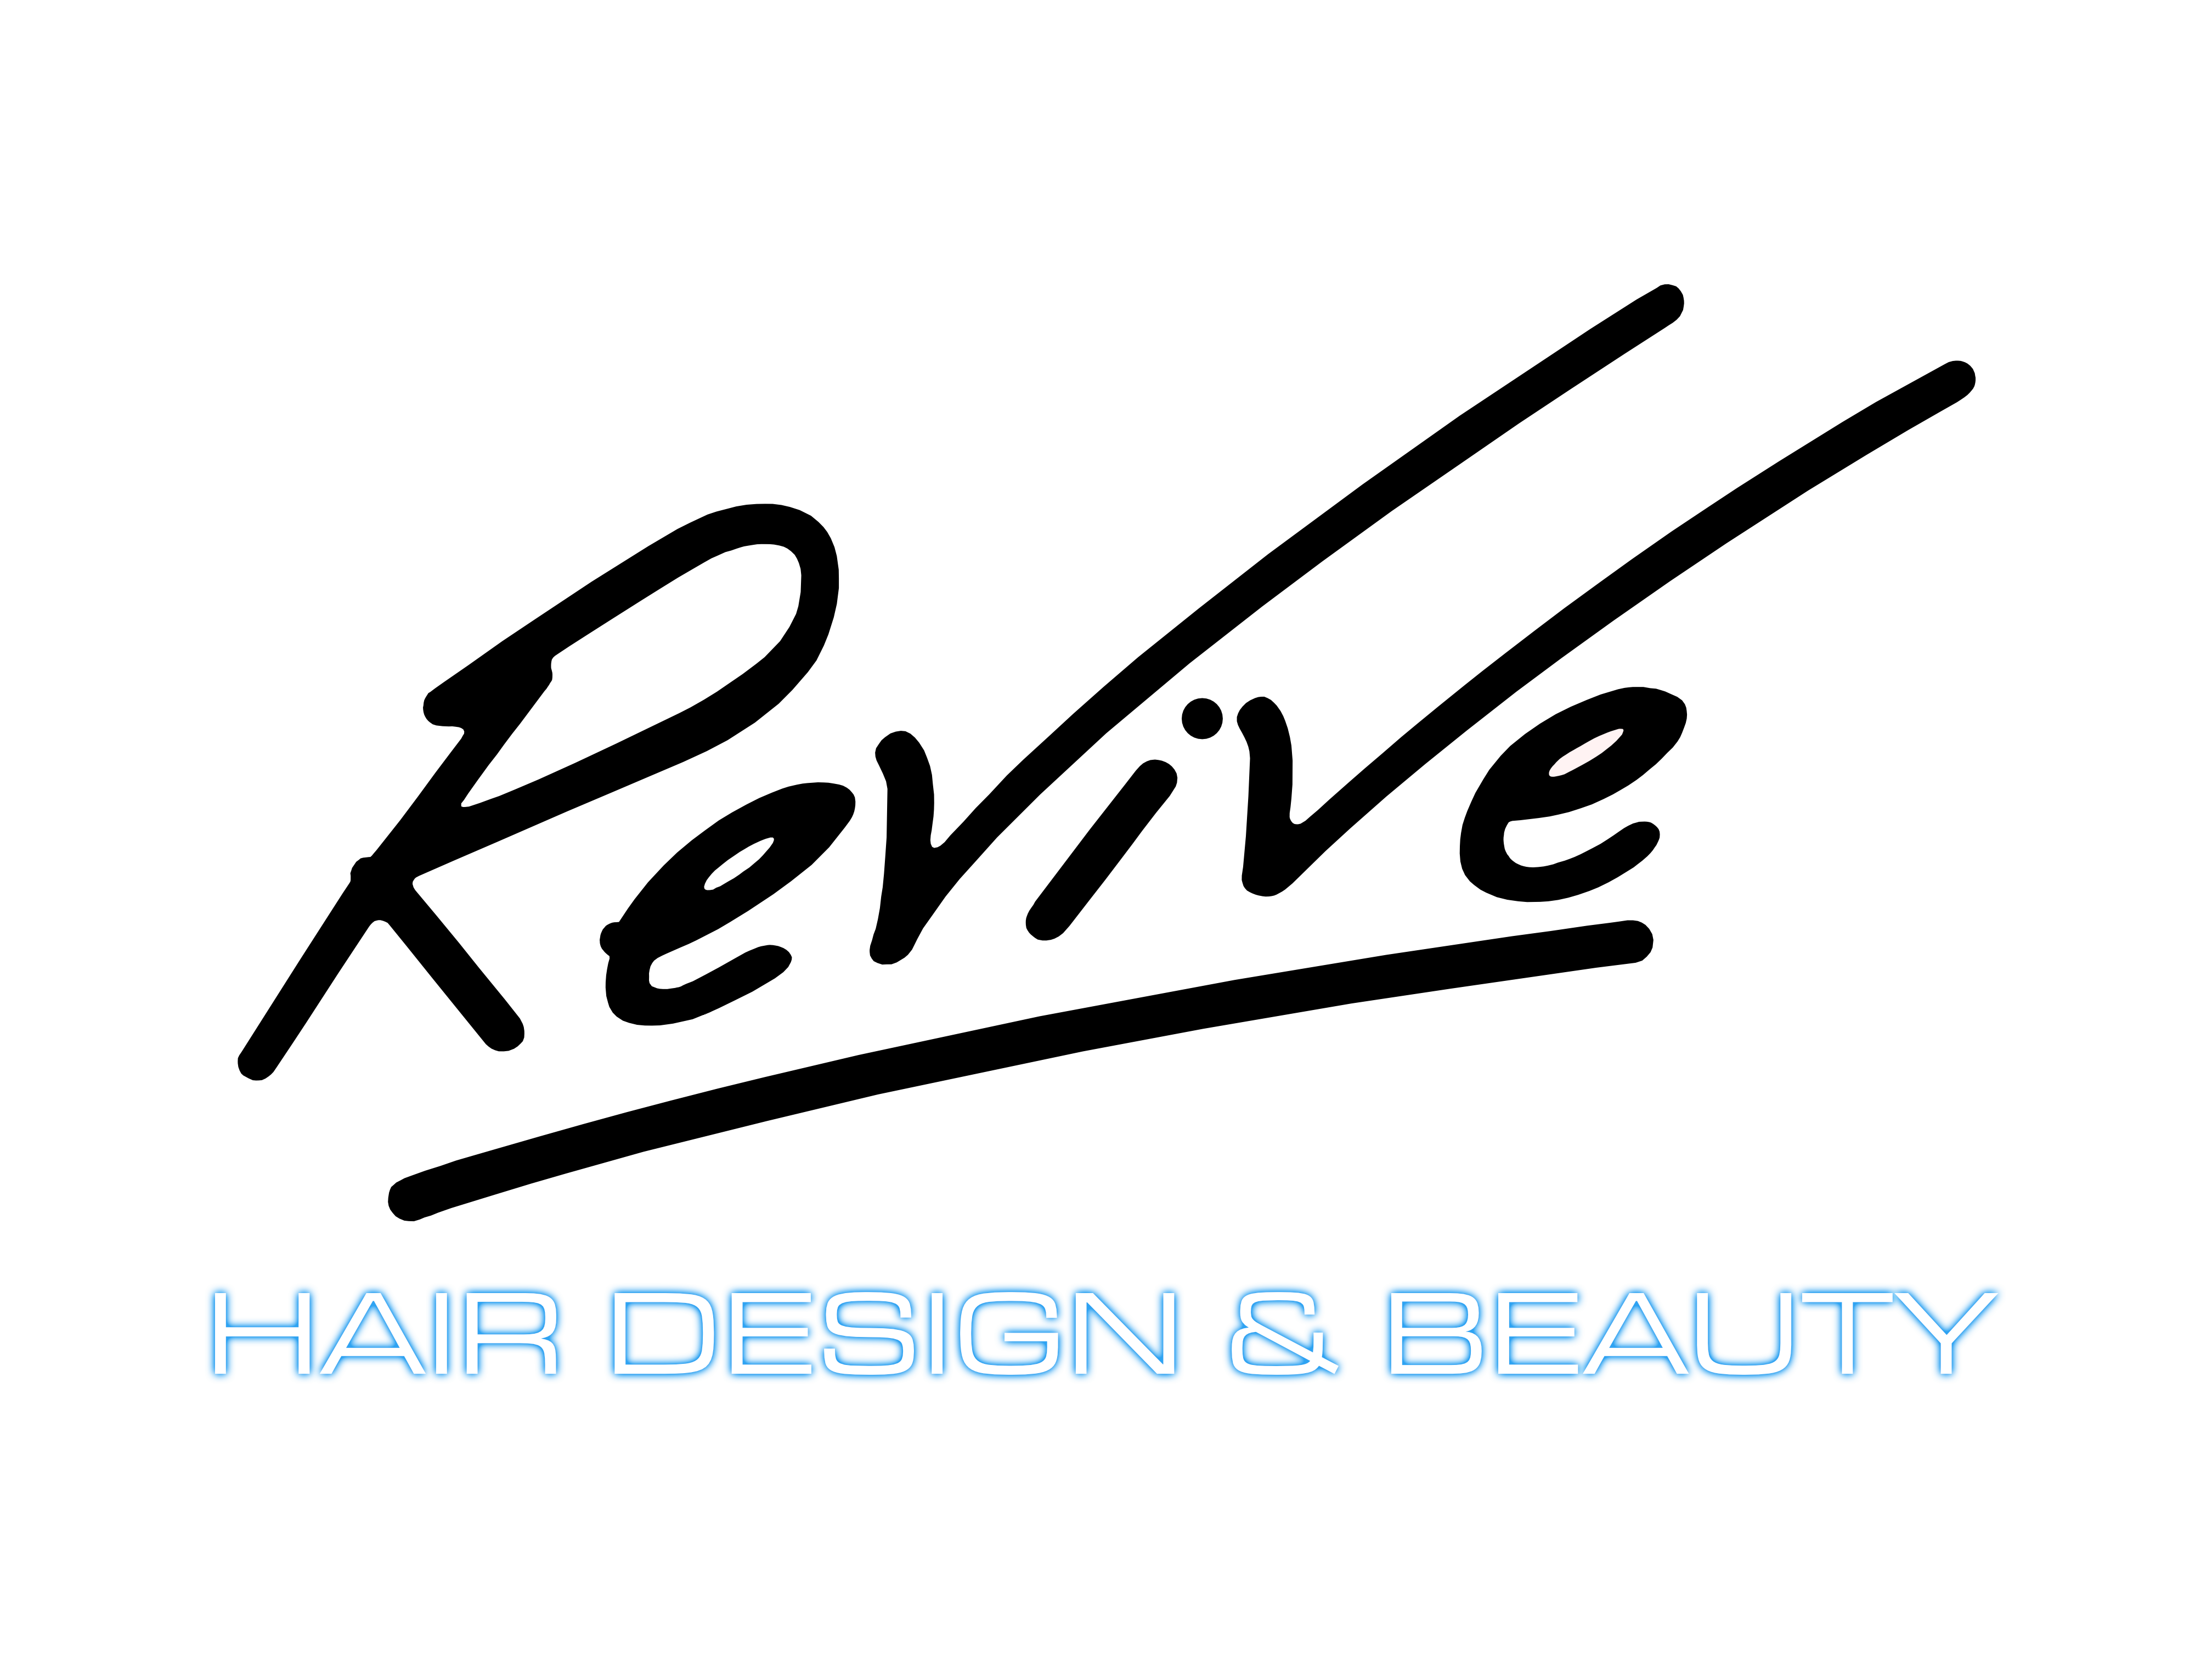 Revive Hair Design & Beauty